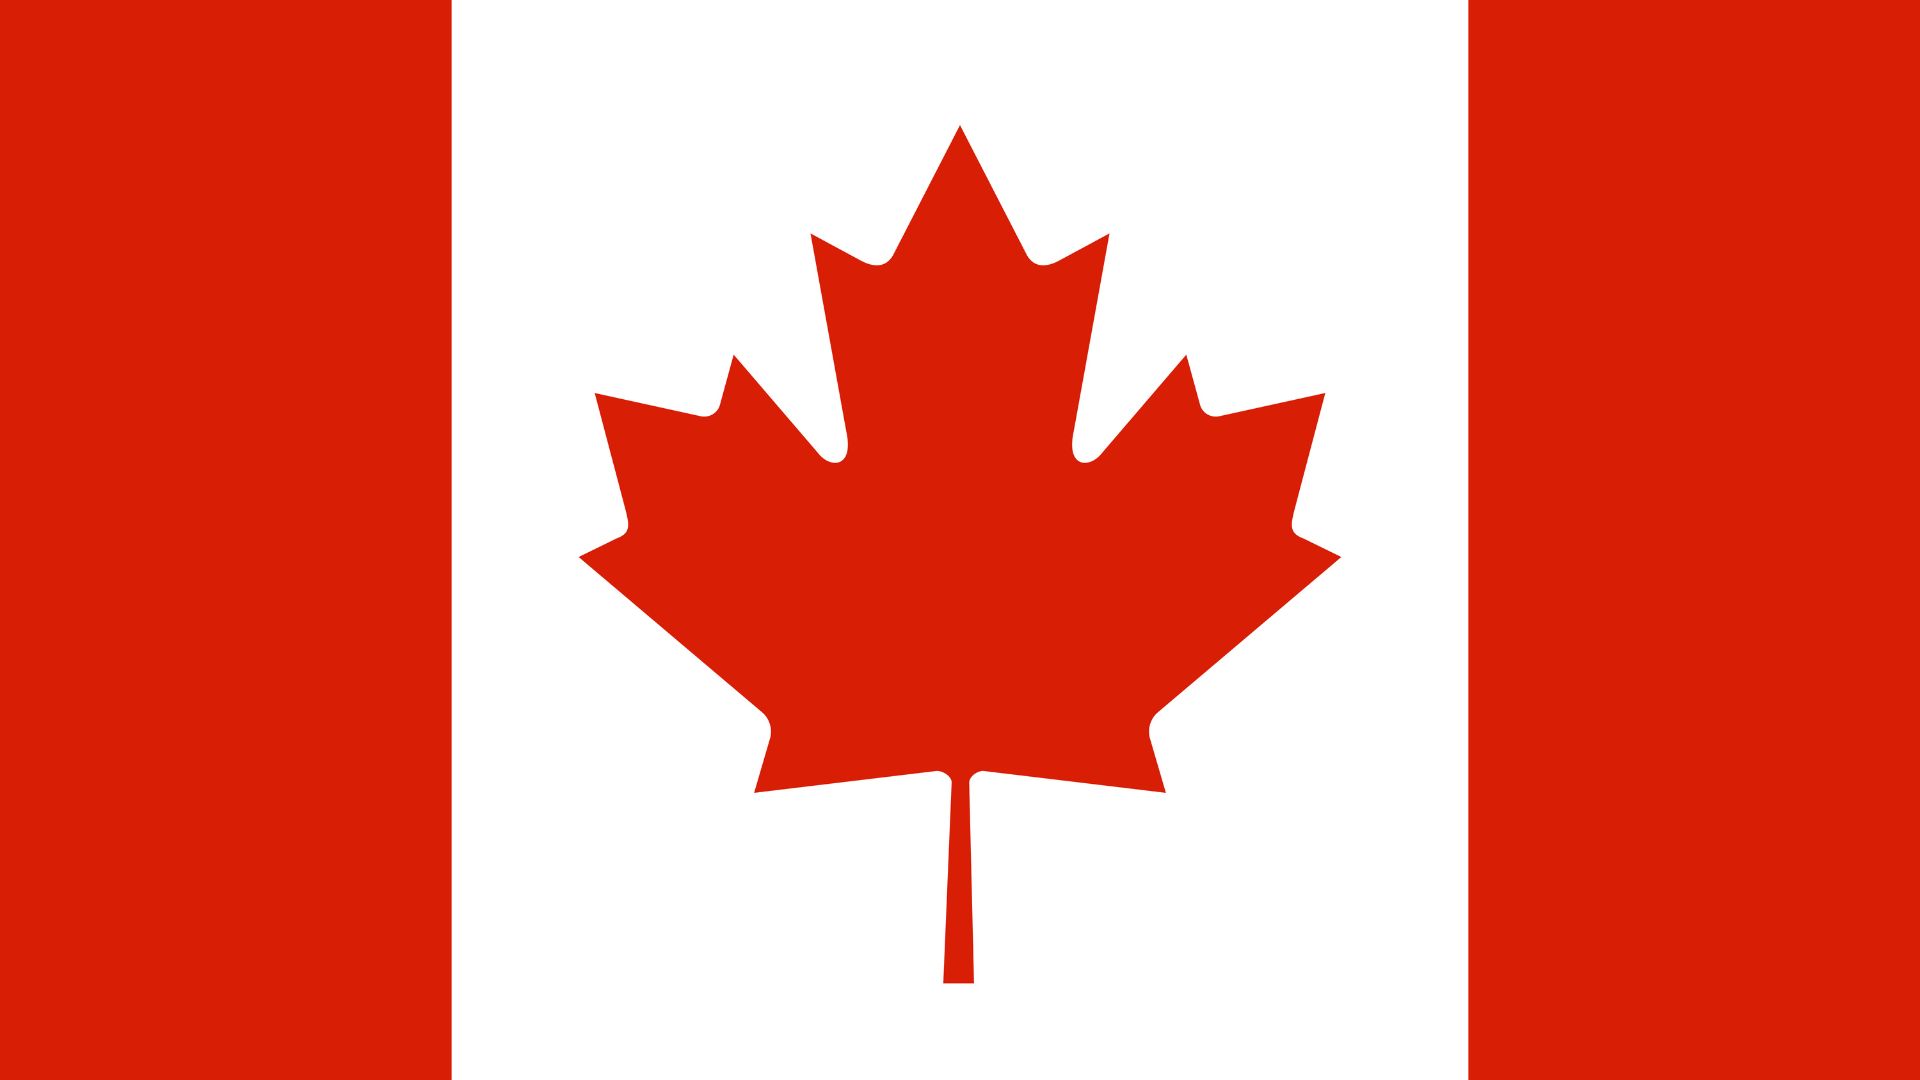 Remote Contact Center Services in Canada